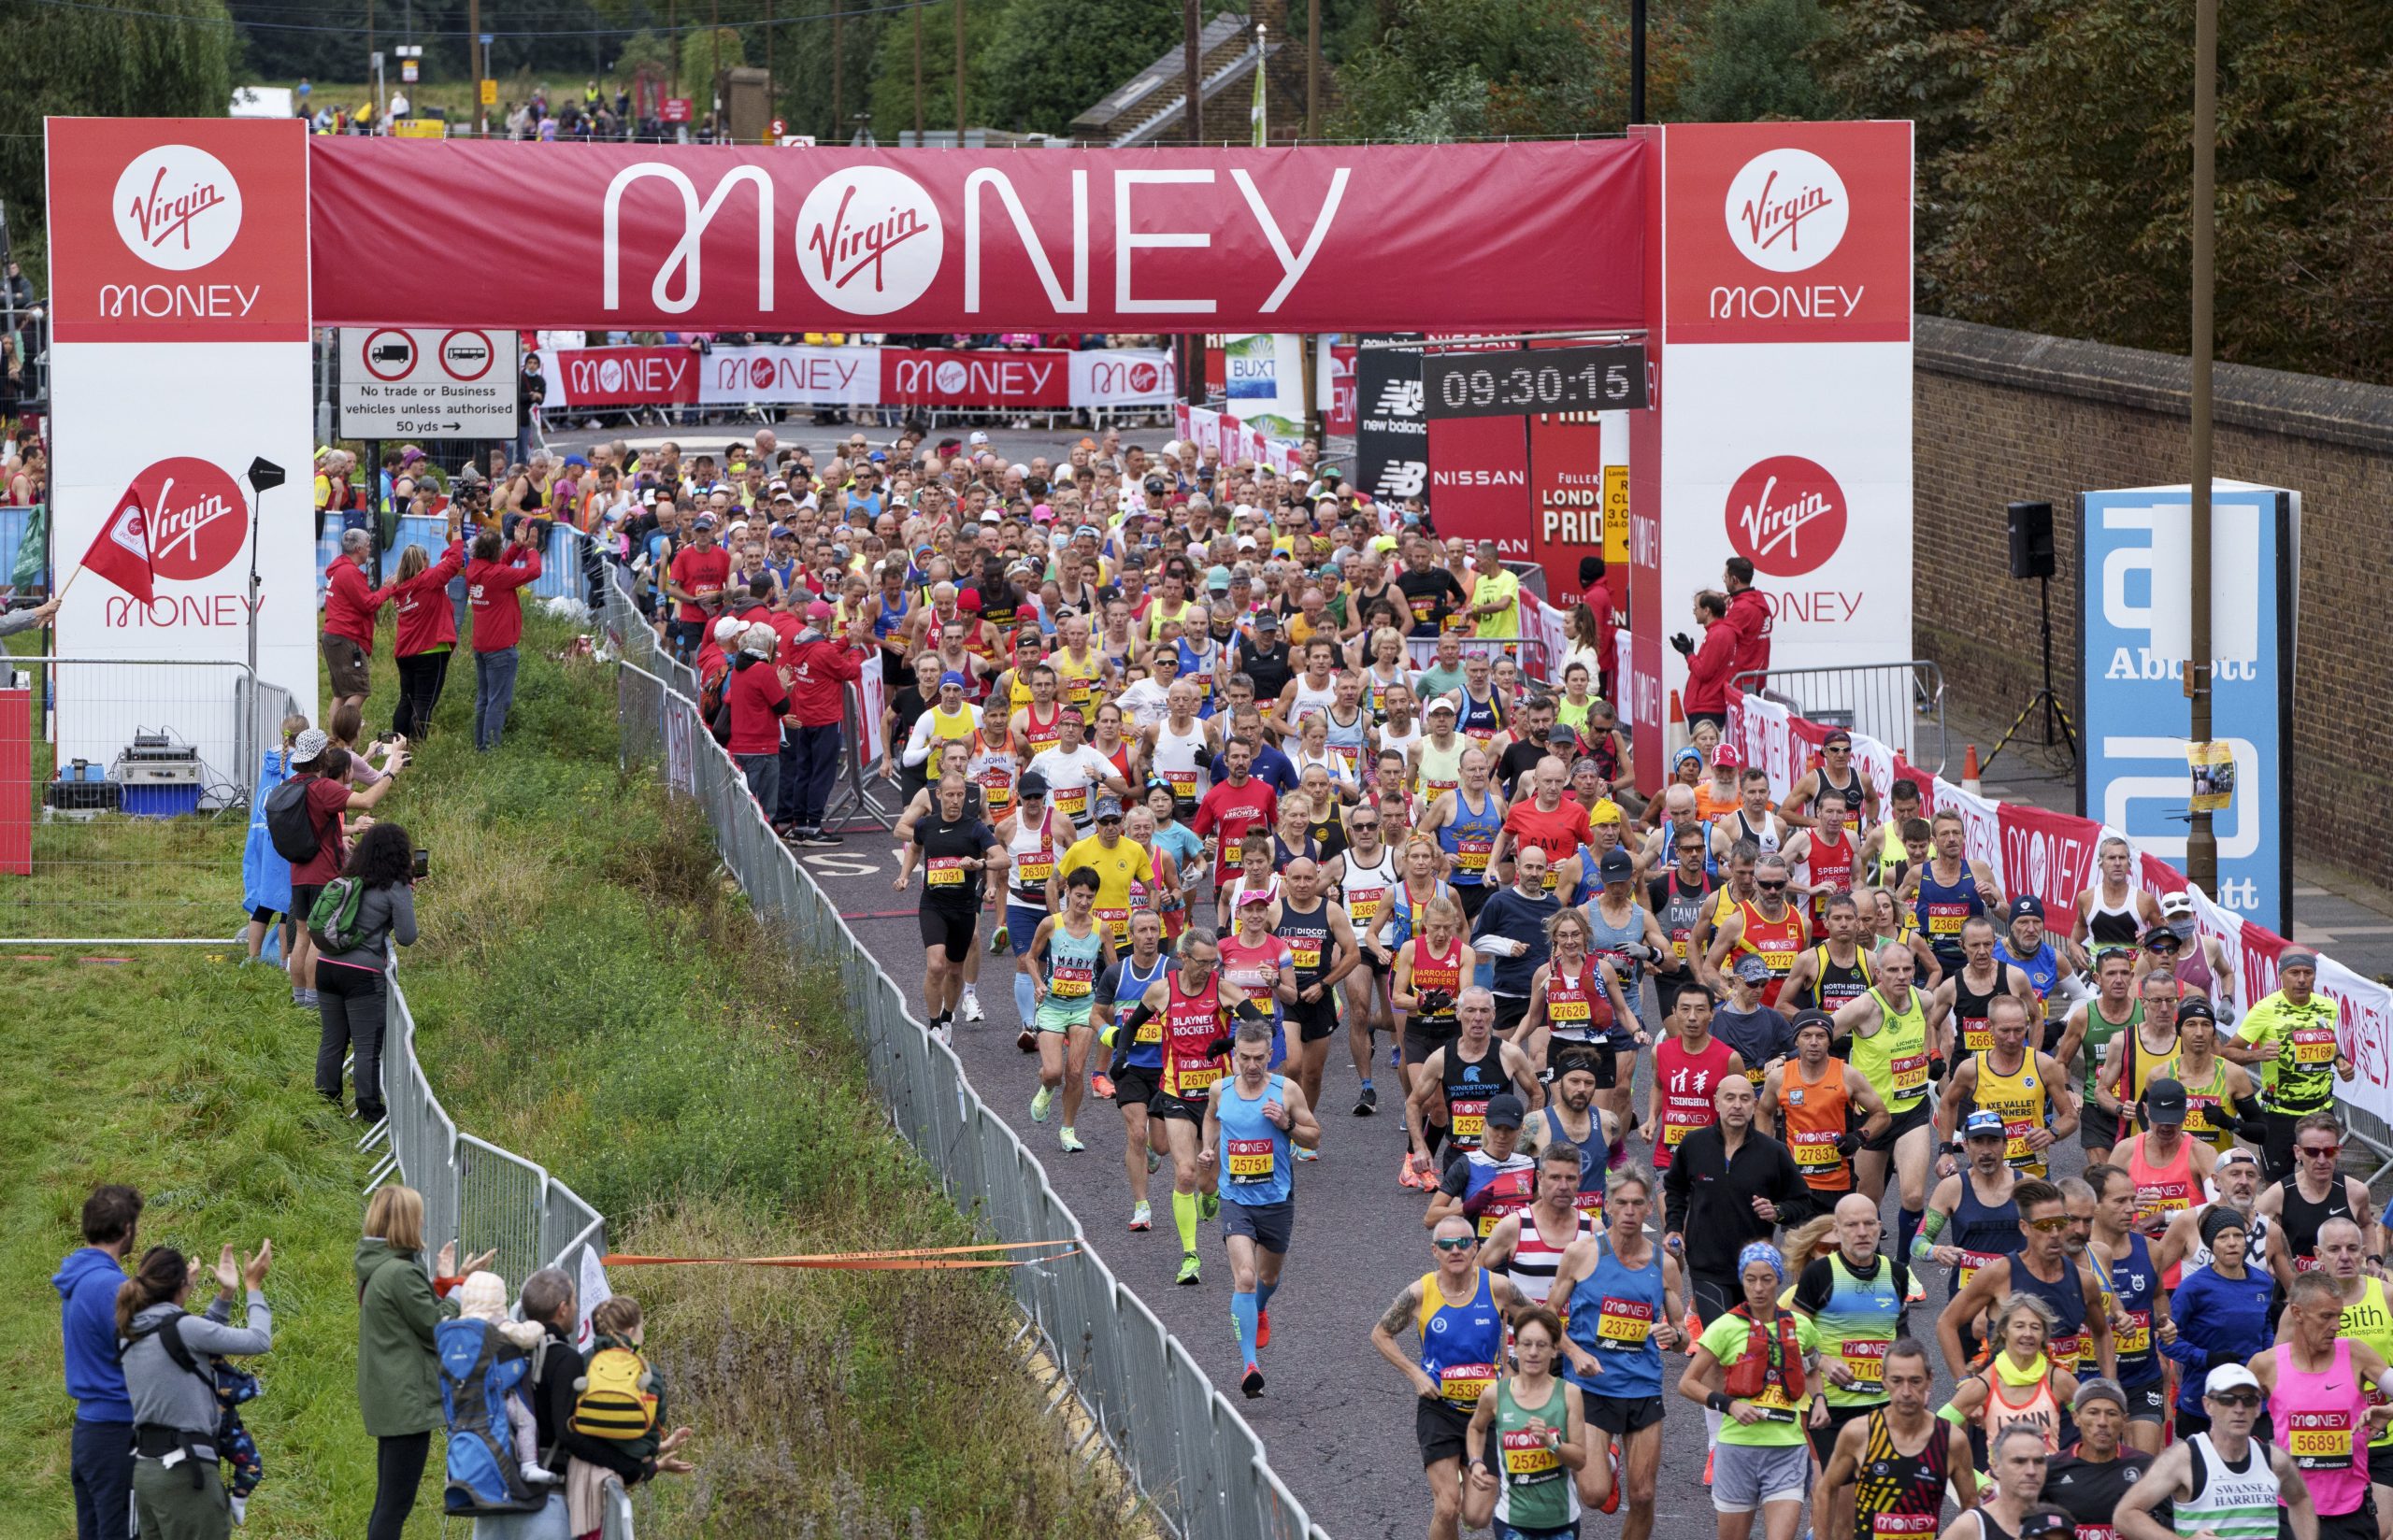 30 fun new world records set at London Marathon